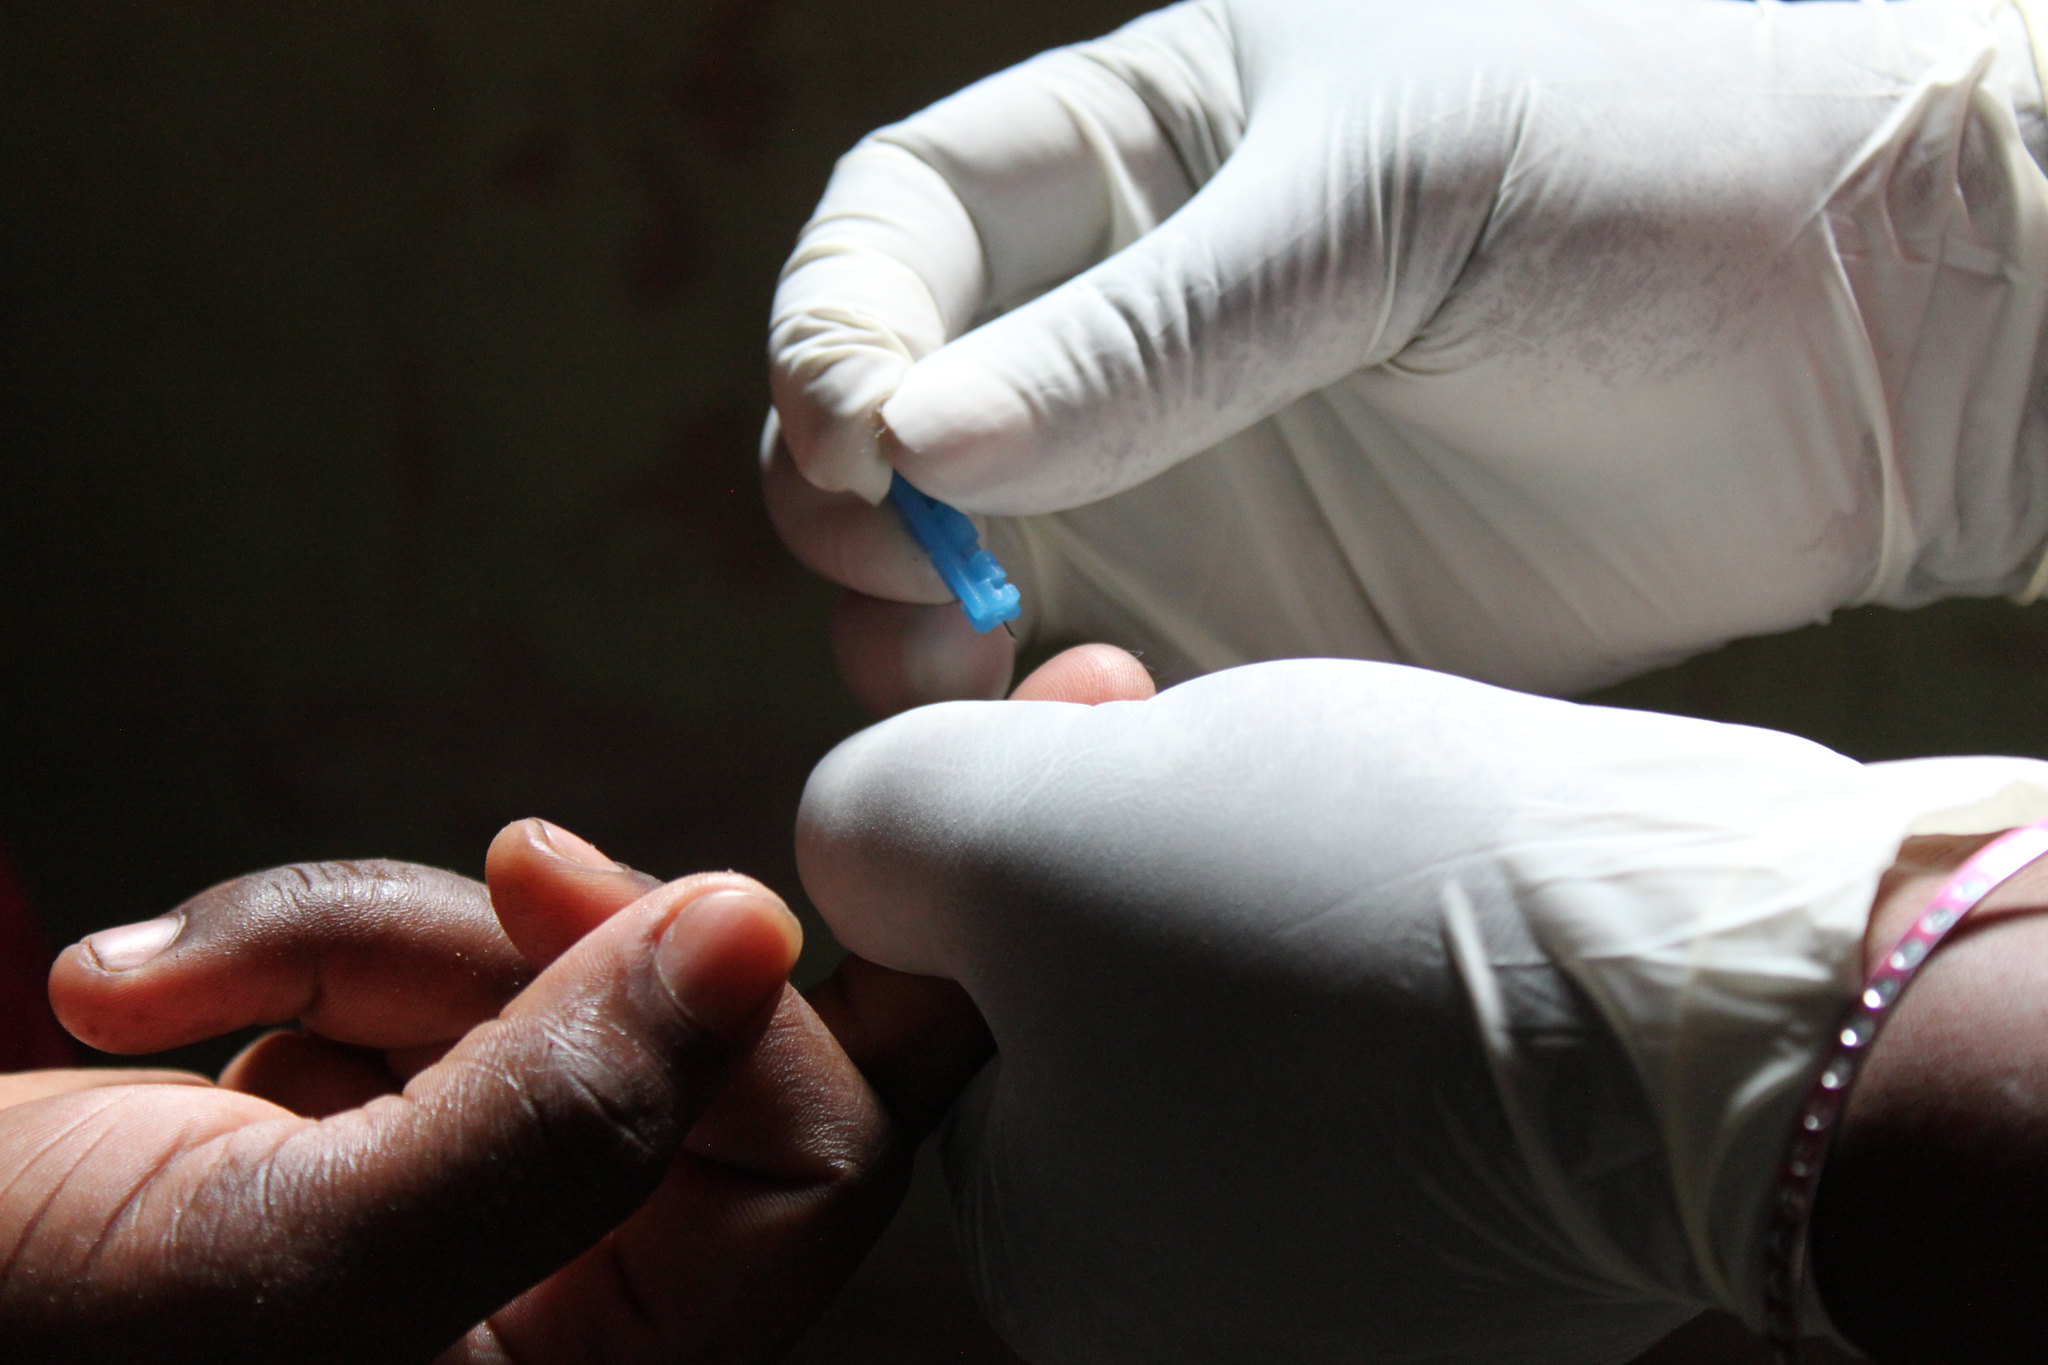 Blood sampling for HIV in Kenya